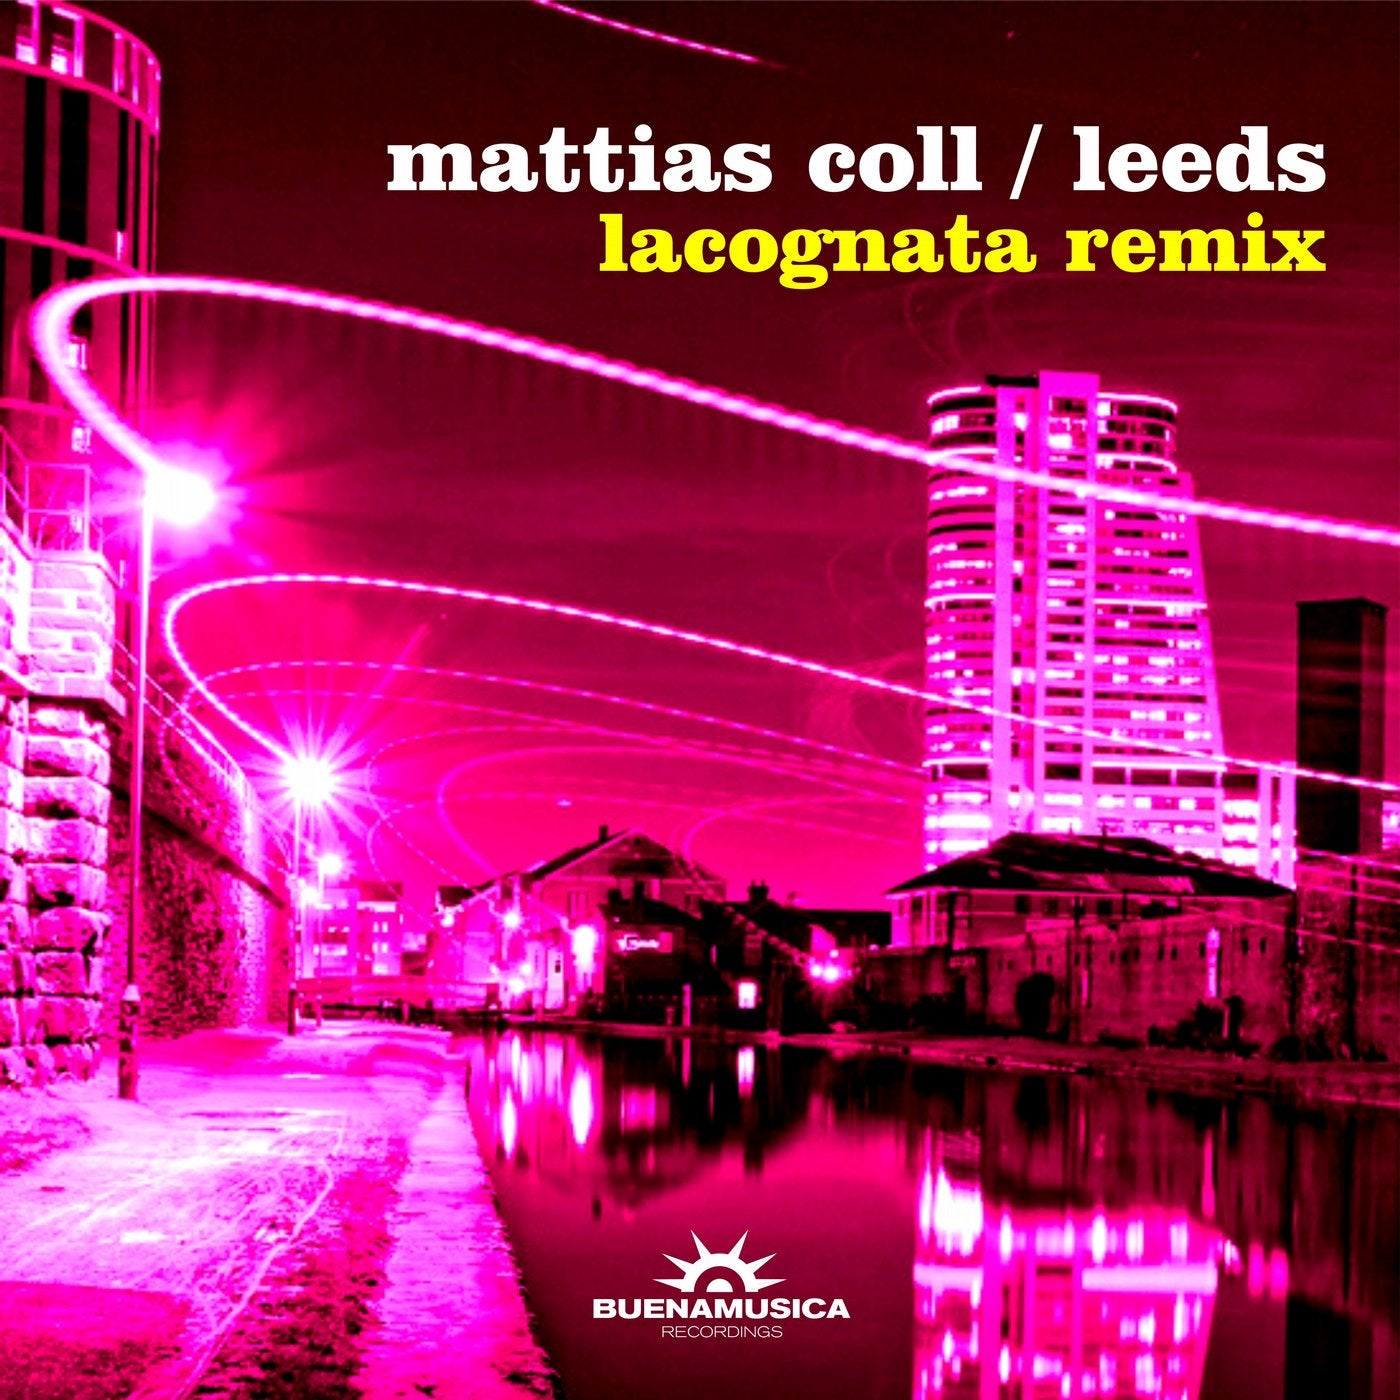 Leeds / Lacognata Remix